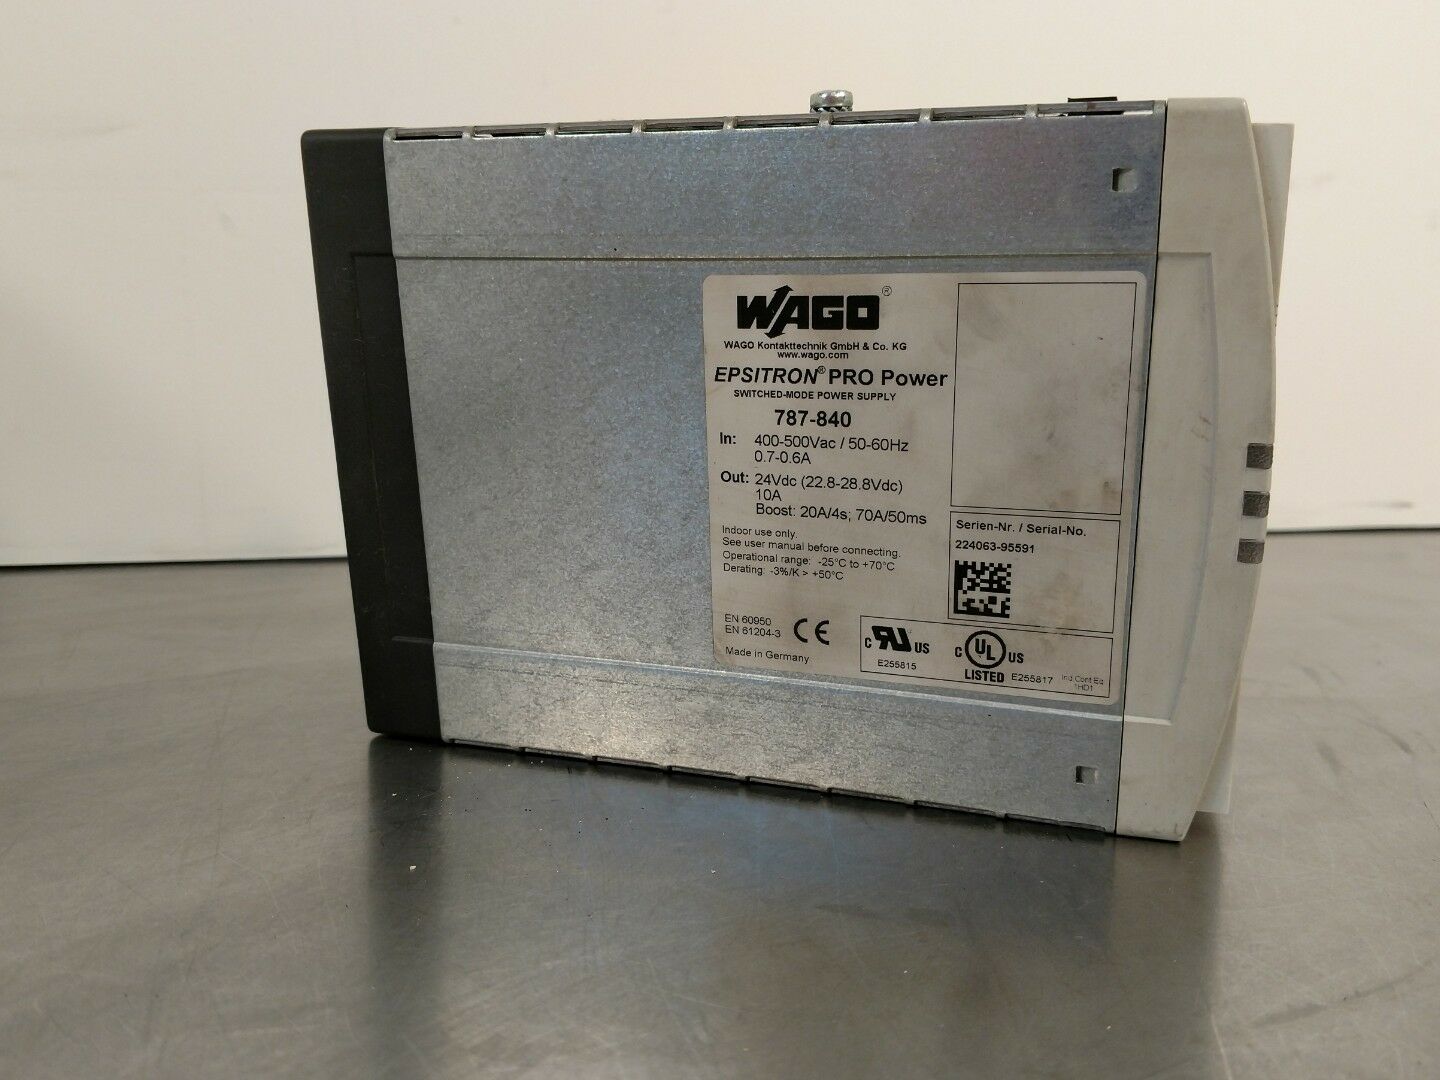 WAGO EPSITRON Pro Power 787-840 Power Supply BIN#4